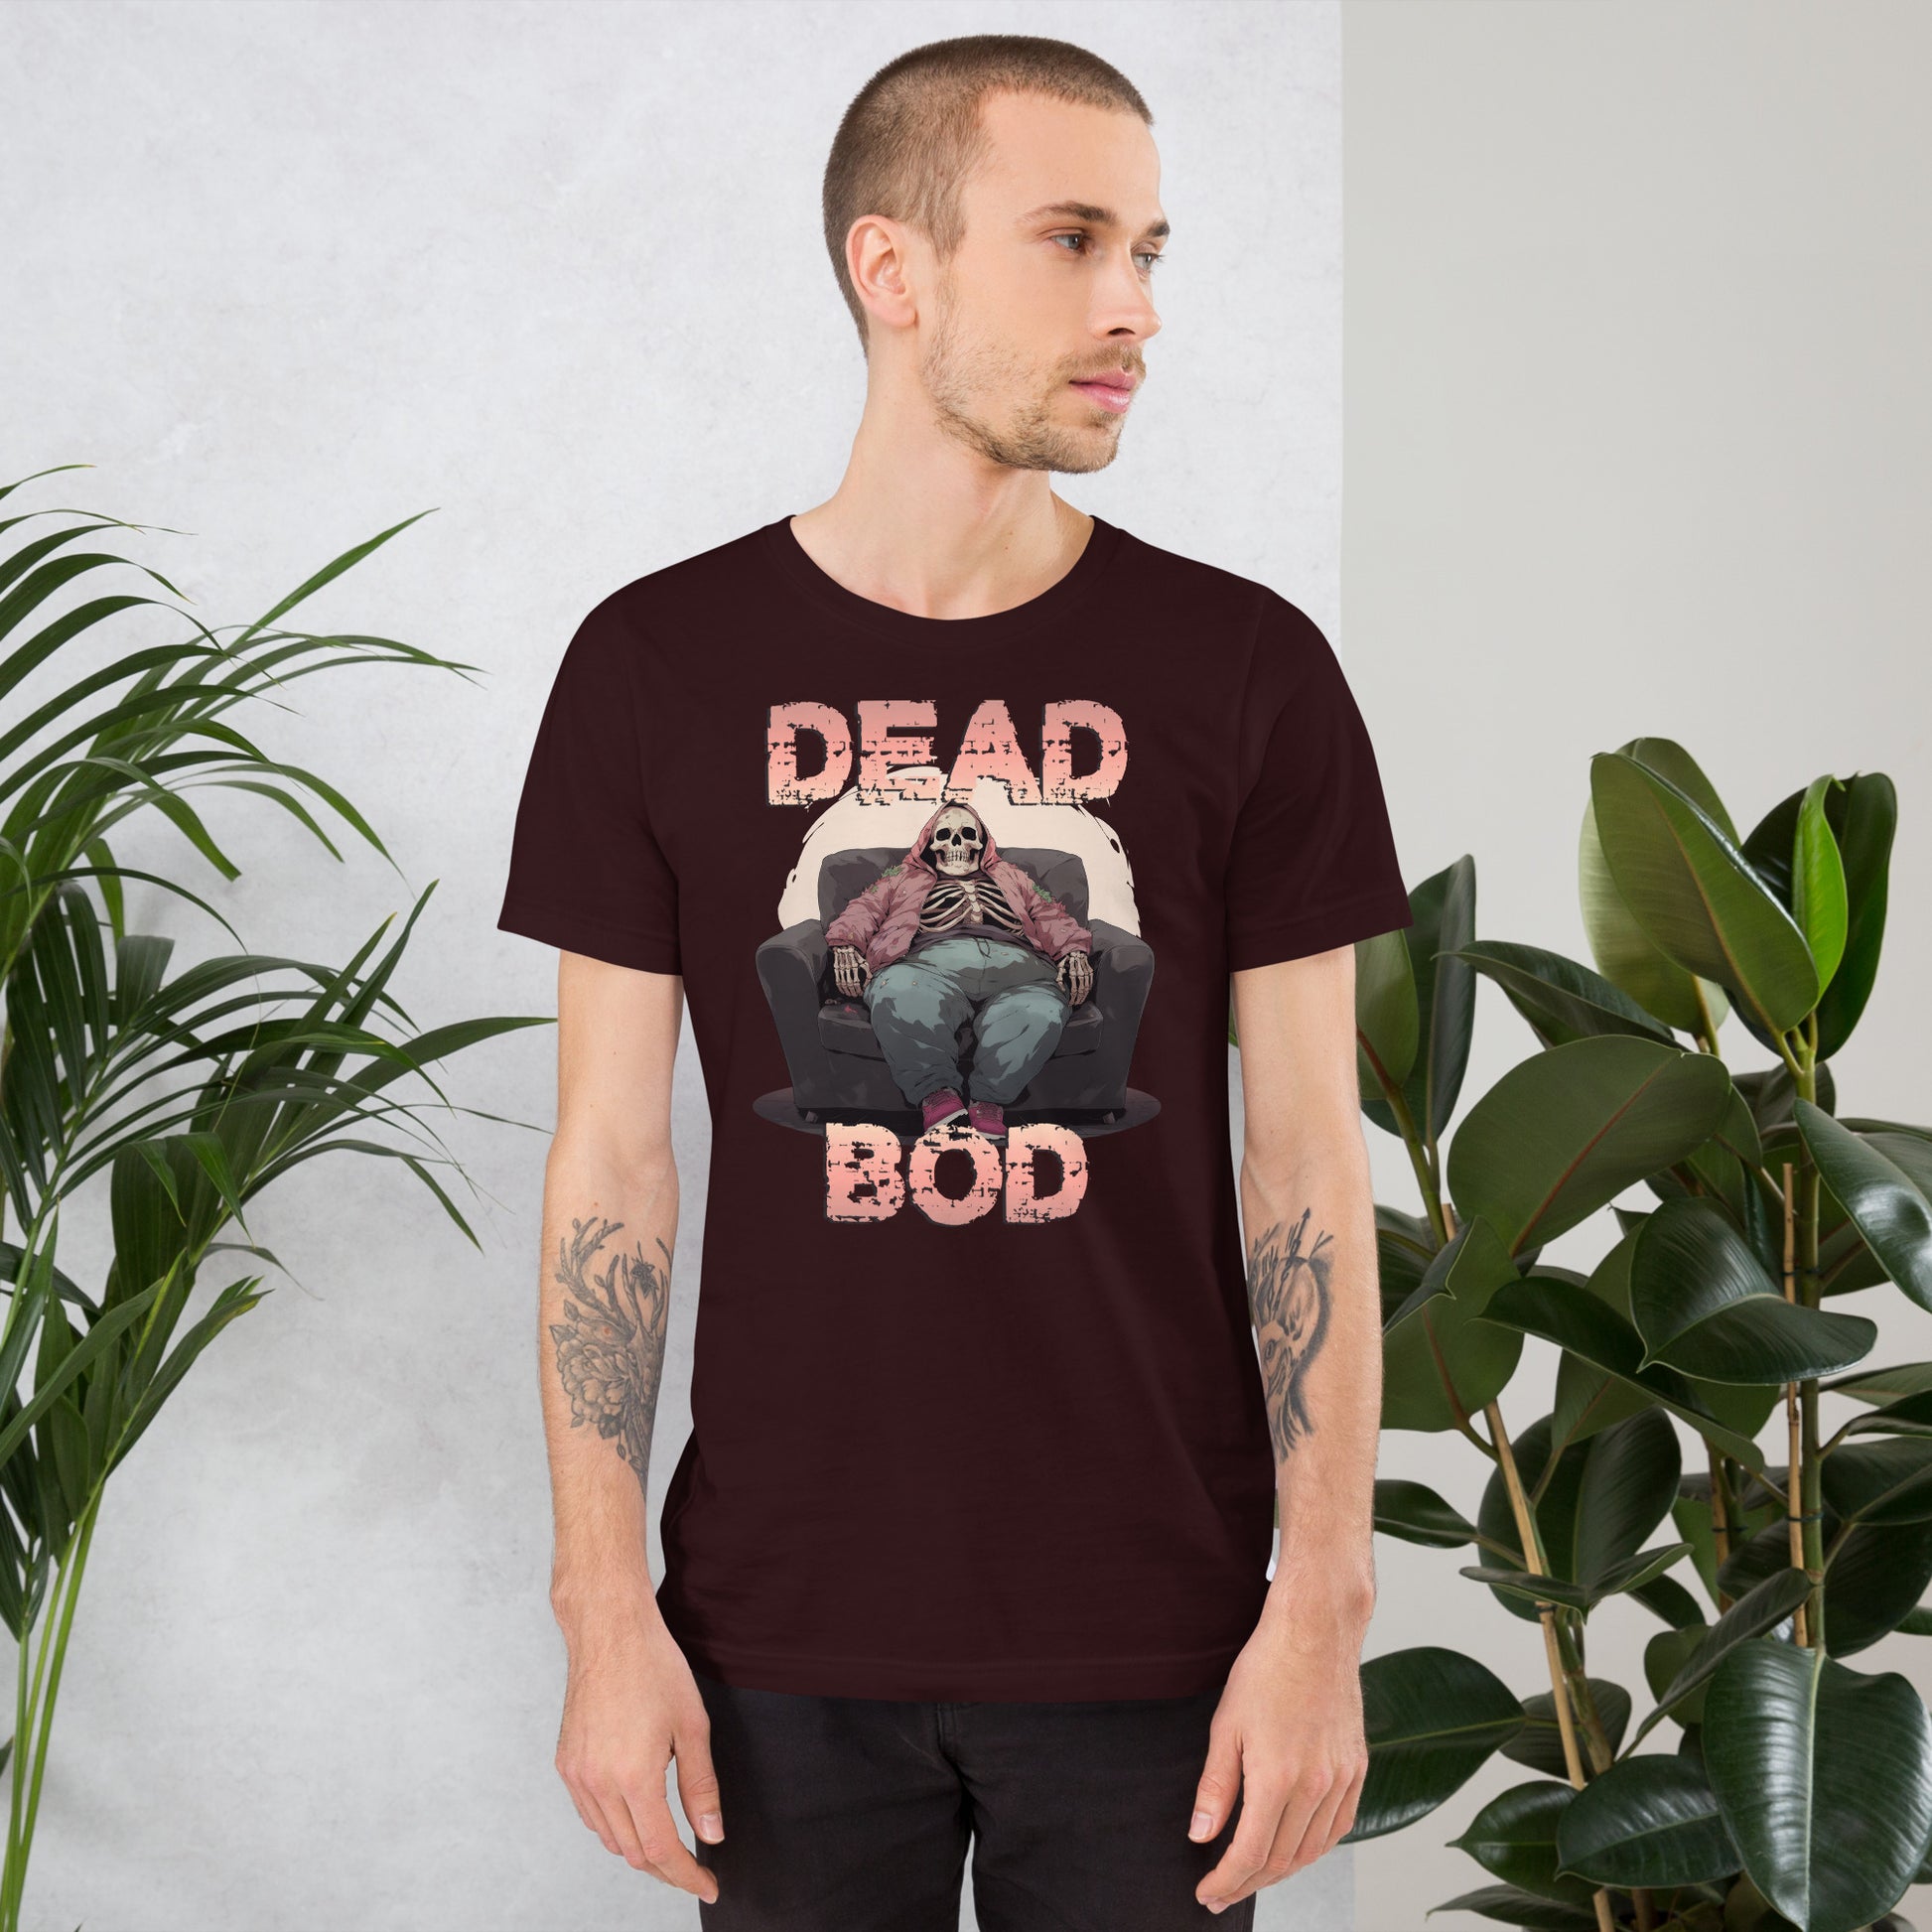 Deadbod_short_sleeve_unisex_t-shirt_oxblood_mockup